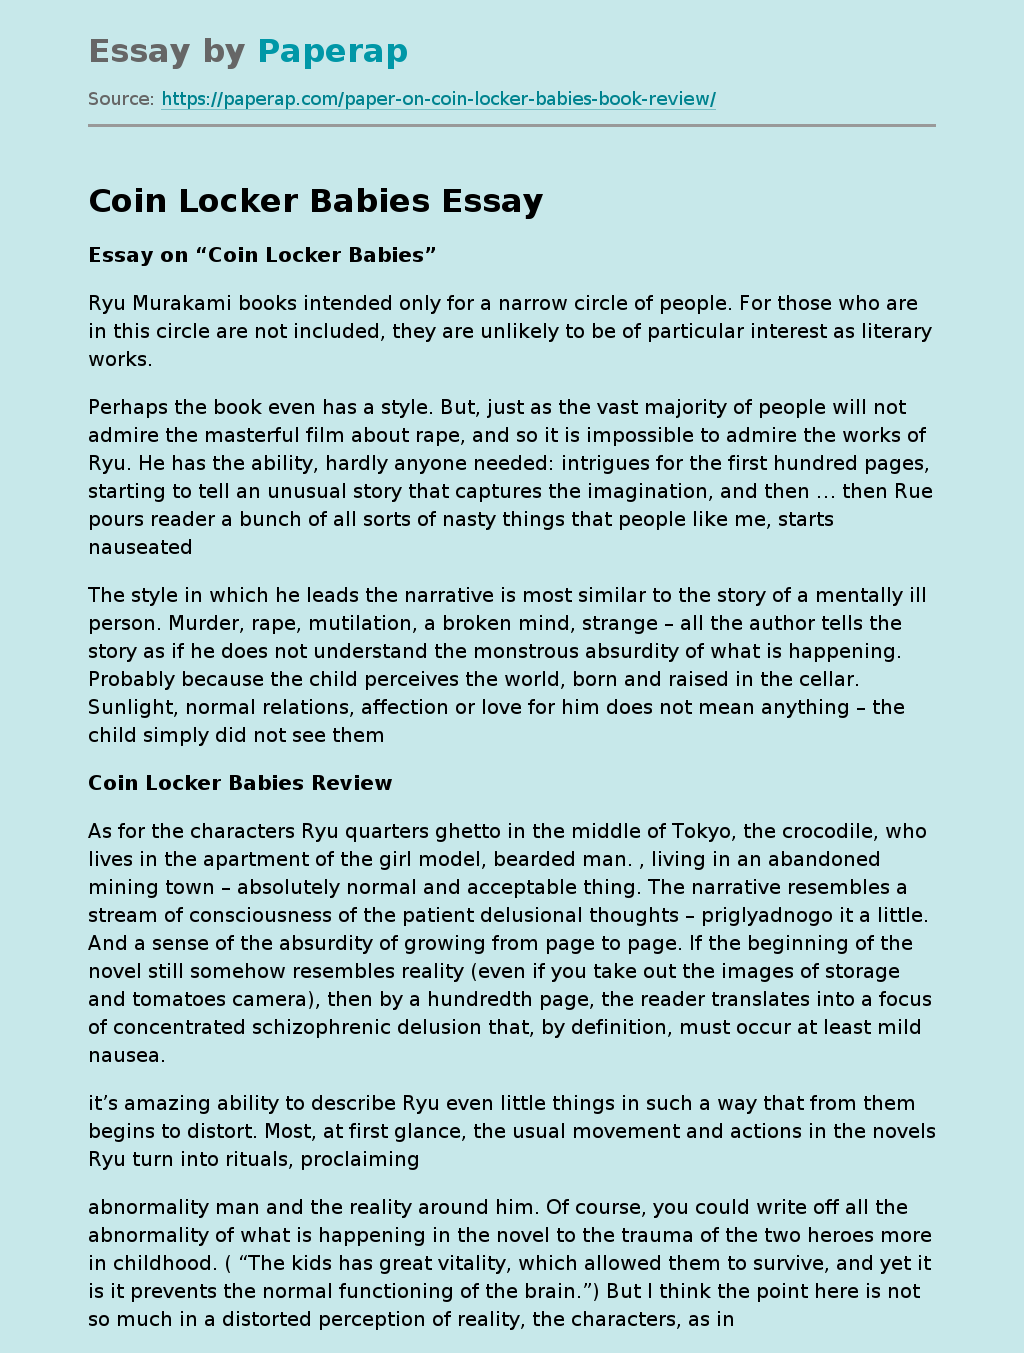 Coin Locker Babies Review